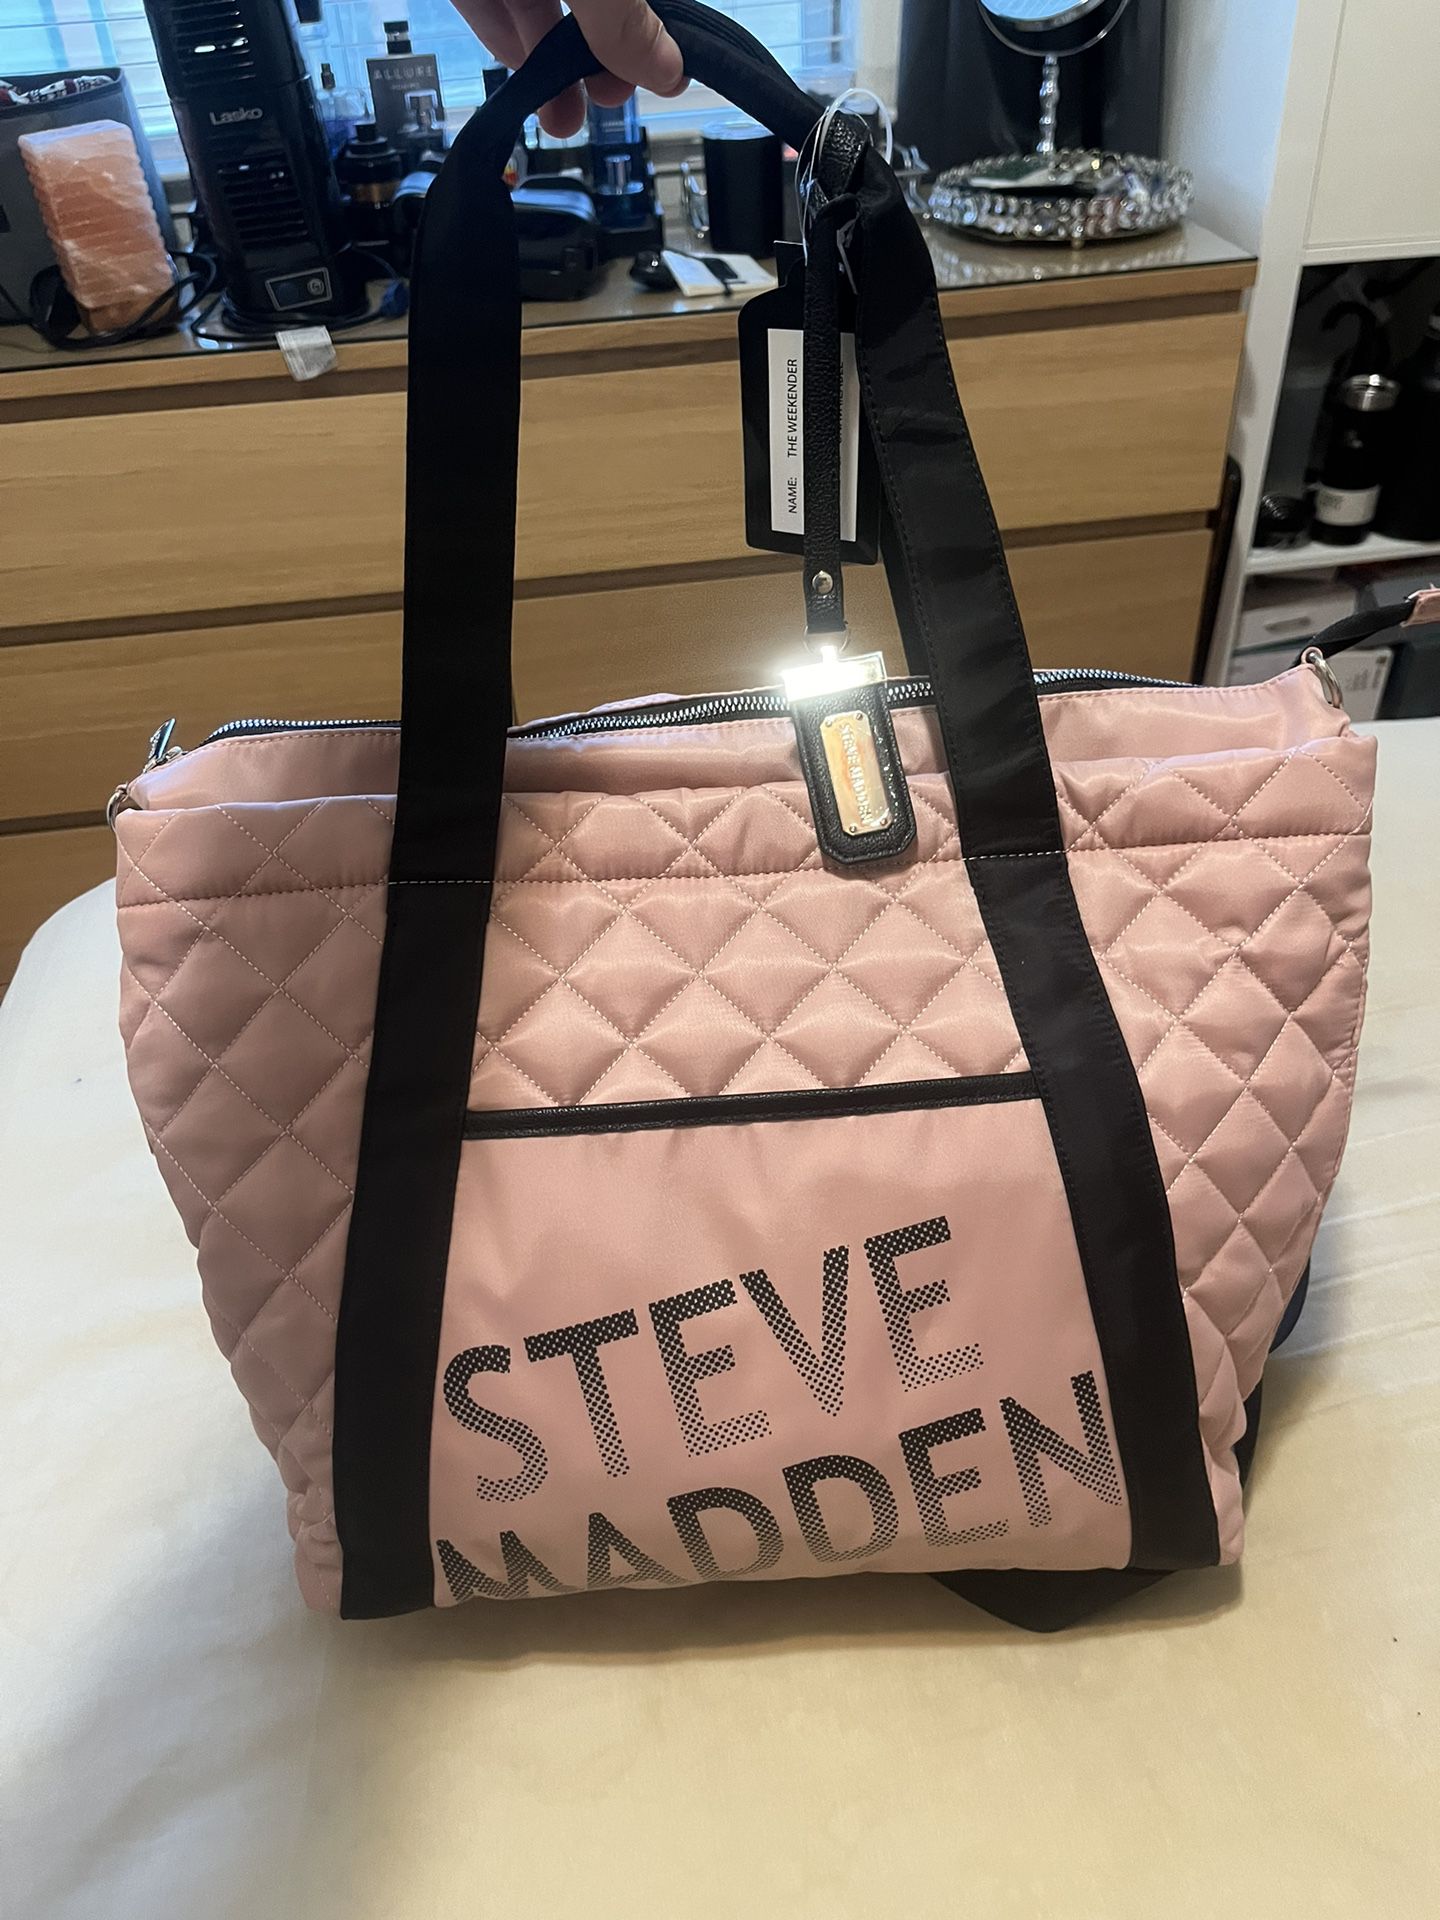 Steve Madden Women’s Quilted Weekender Bag